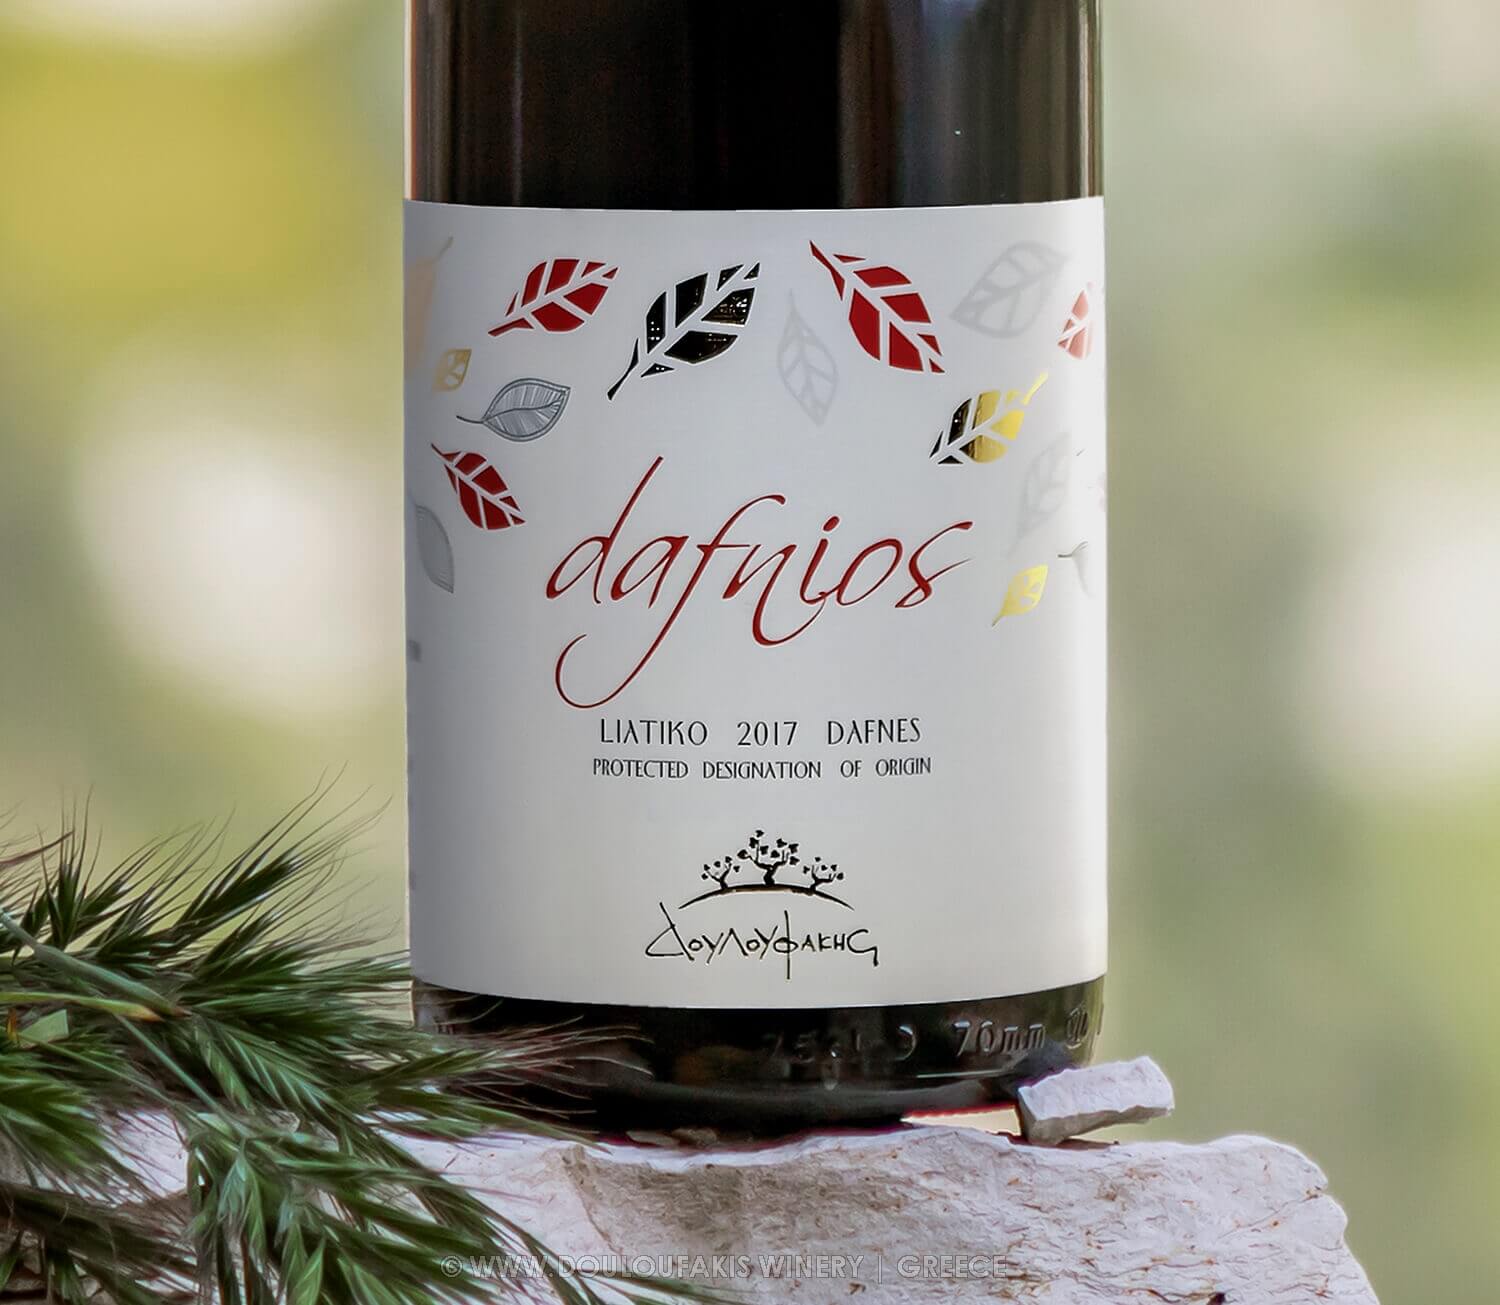 What must a Greek Liatiko wine label write on